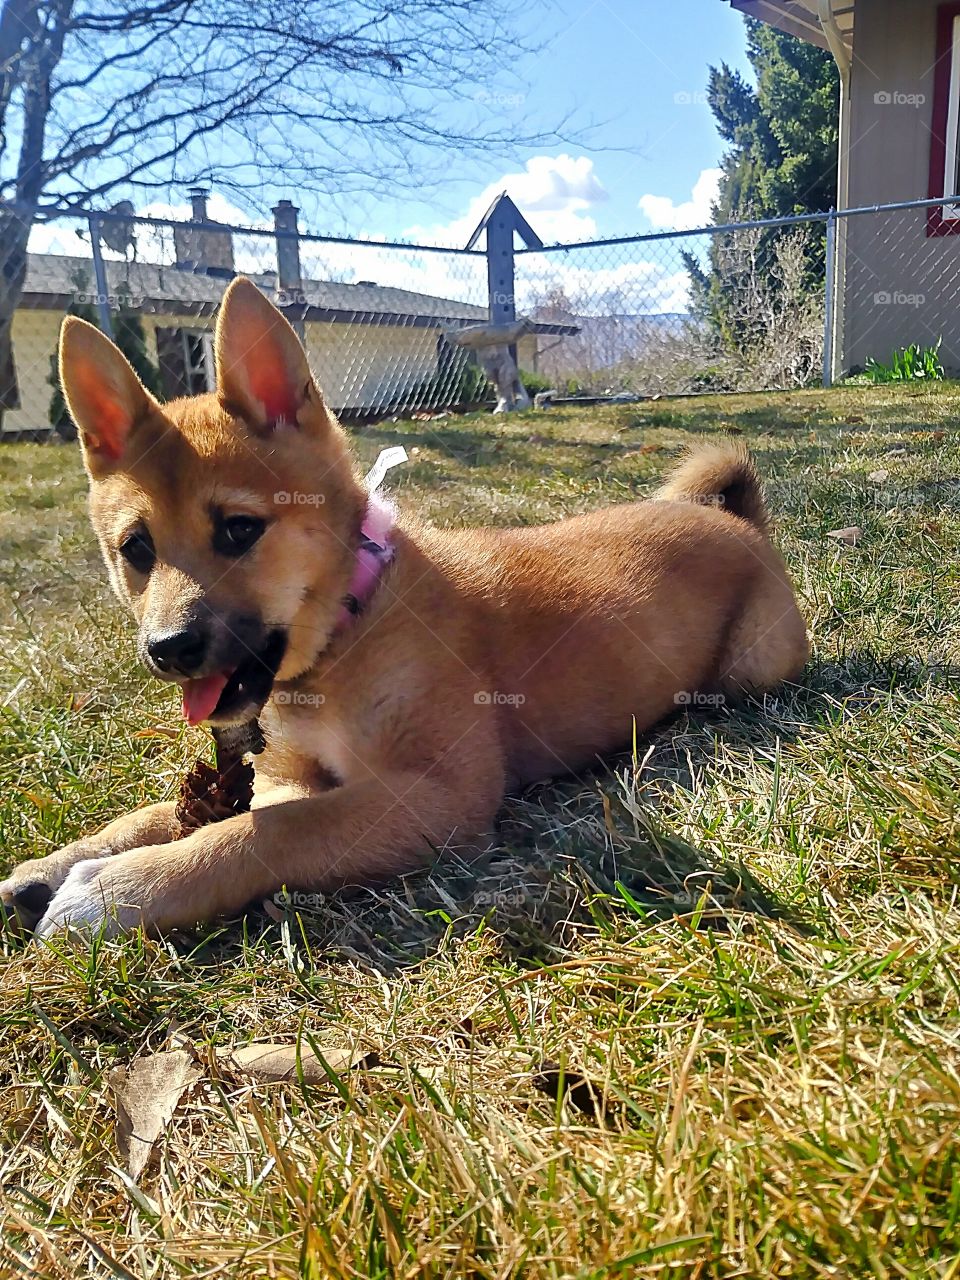 A beautiful Shiba Inu pup enjoying a sunny day and a nice pinecone!